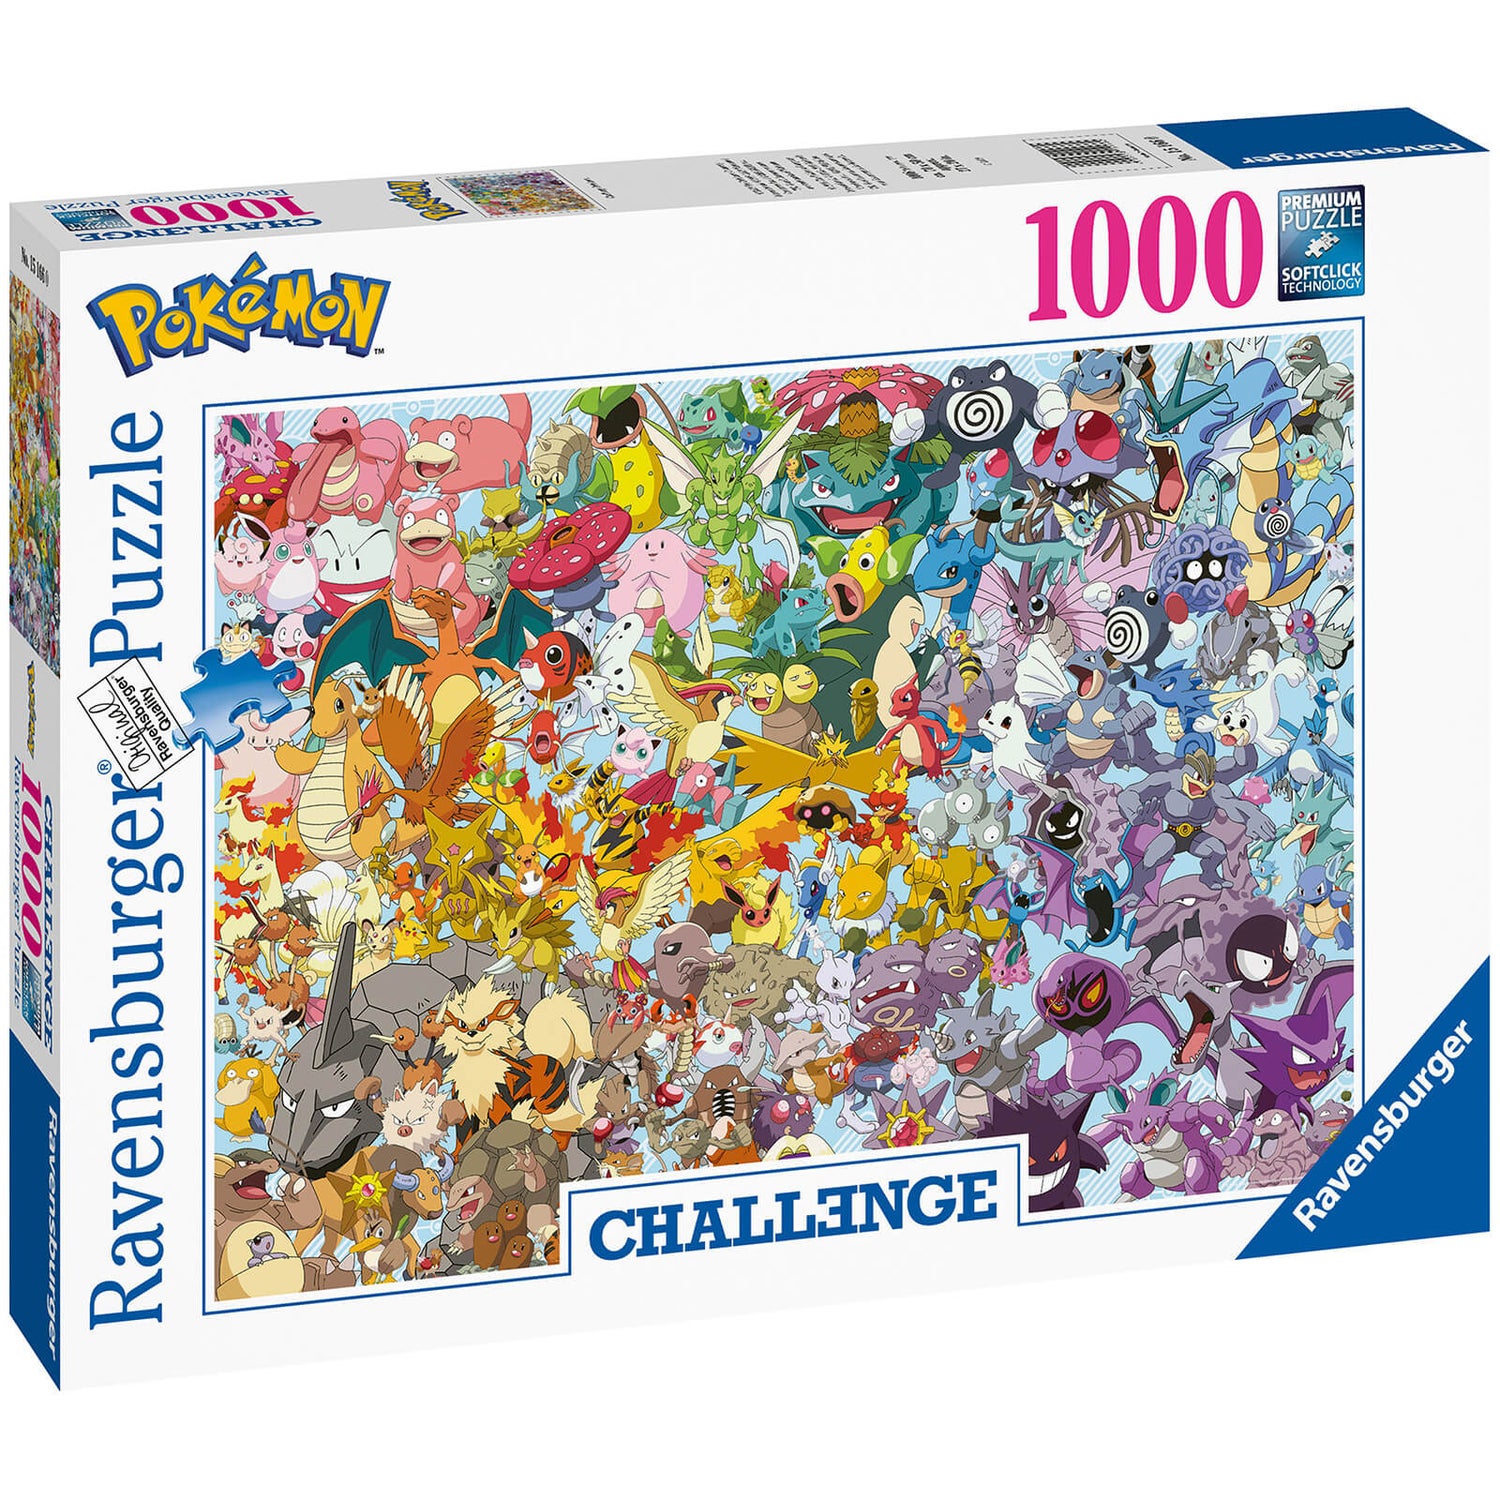 Ravensburger Pokémon 1000 piece Challenge Jigsaw Puzzle